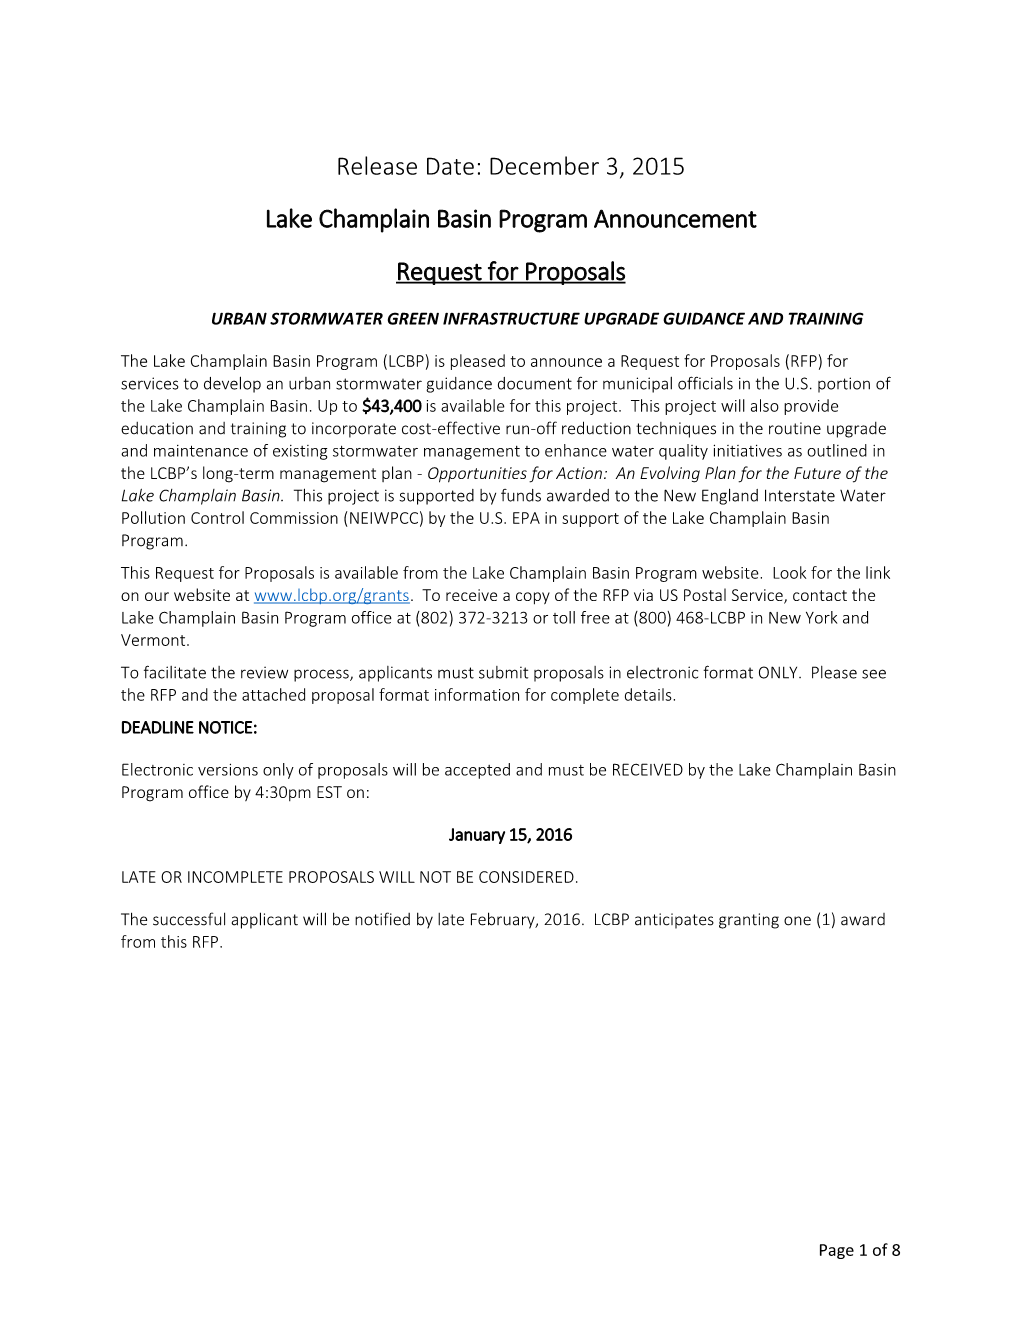 Lake Champlain Basin Program Announcement